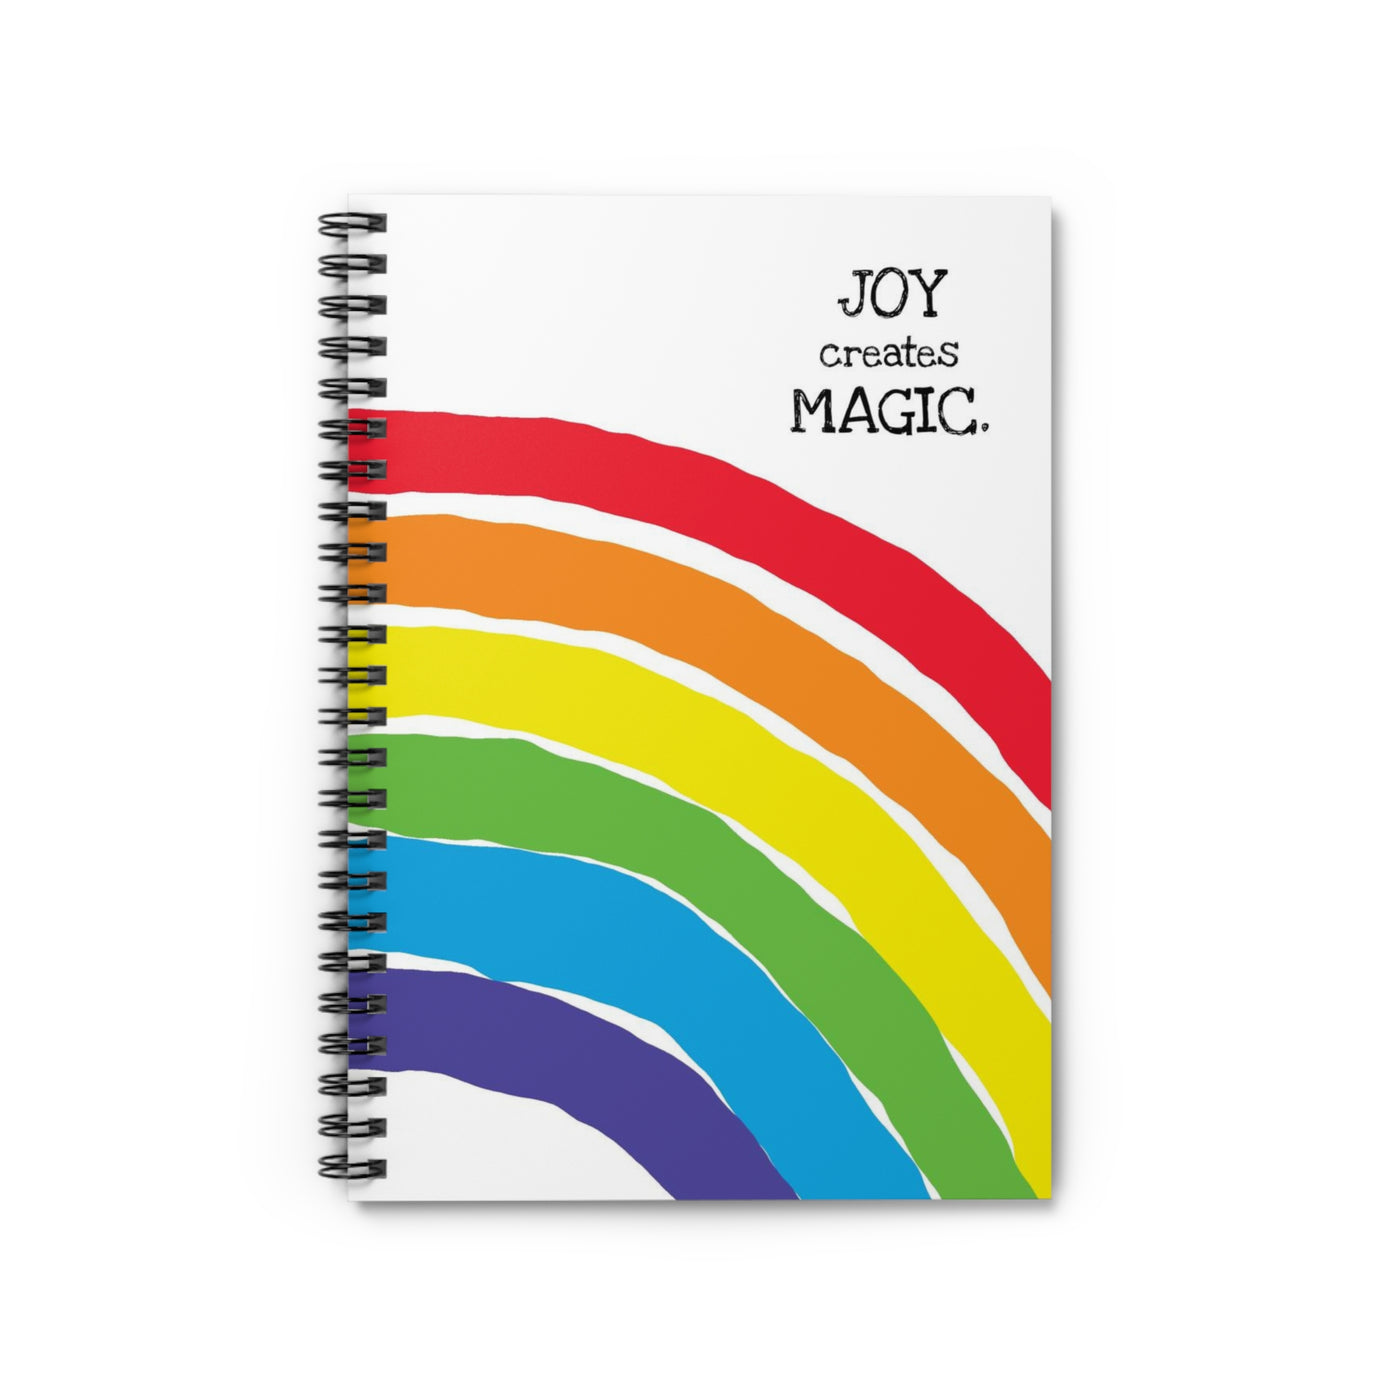 Joy Creates Magic Spiral Notebook - Ruled Line